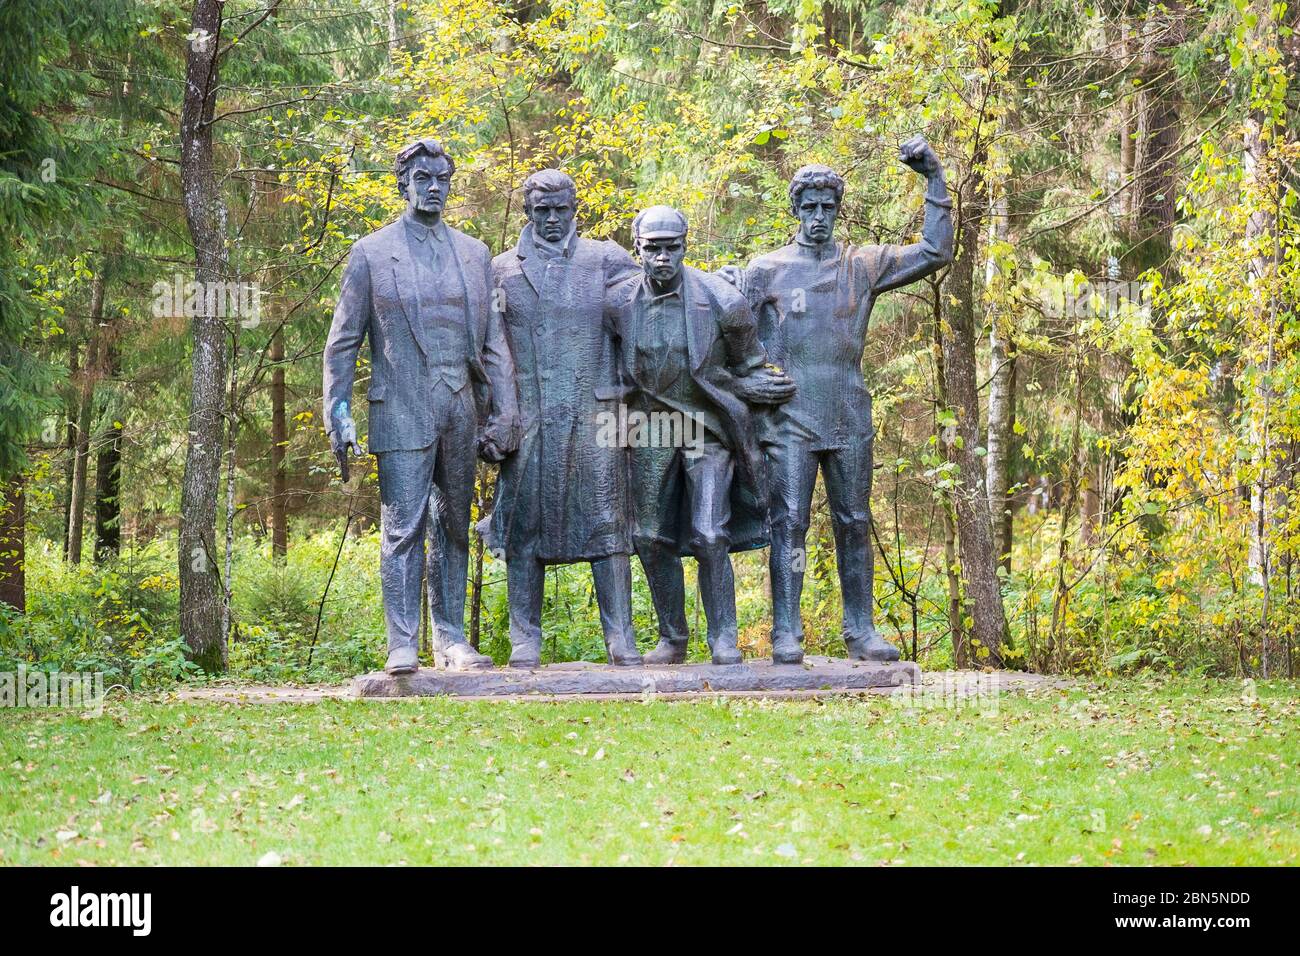 Bronze statue of USSR communist youth. At Gruto Parkas near Druskininkai, Lithuania. Stock Photo